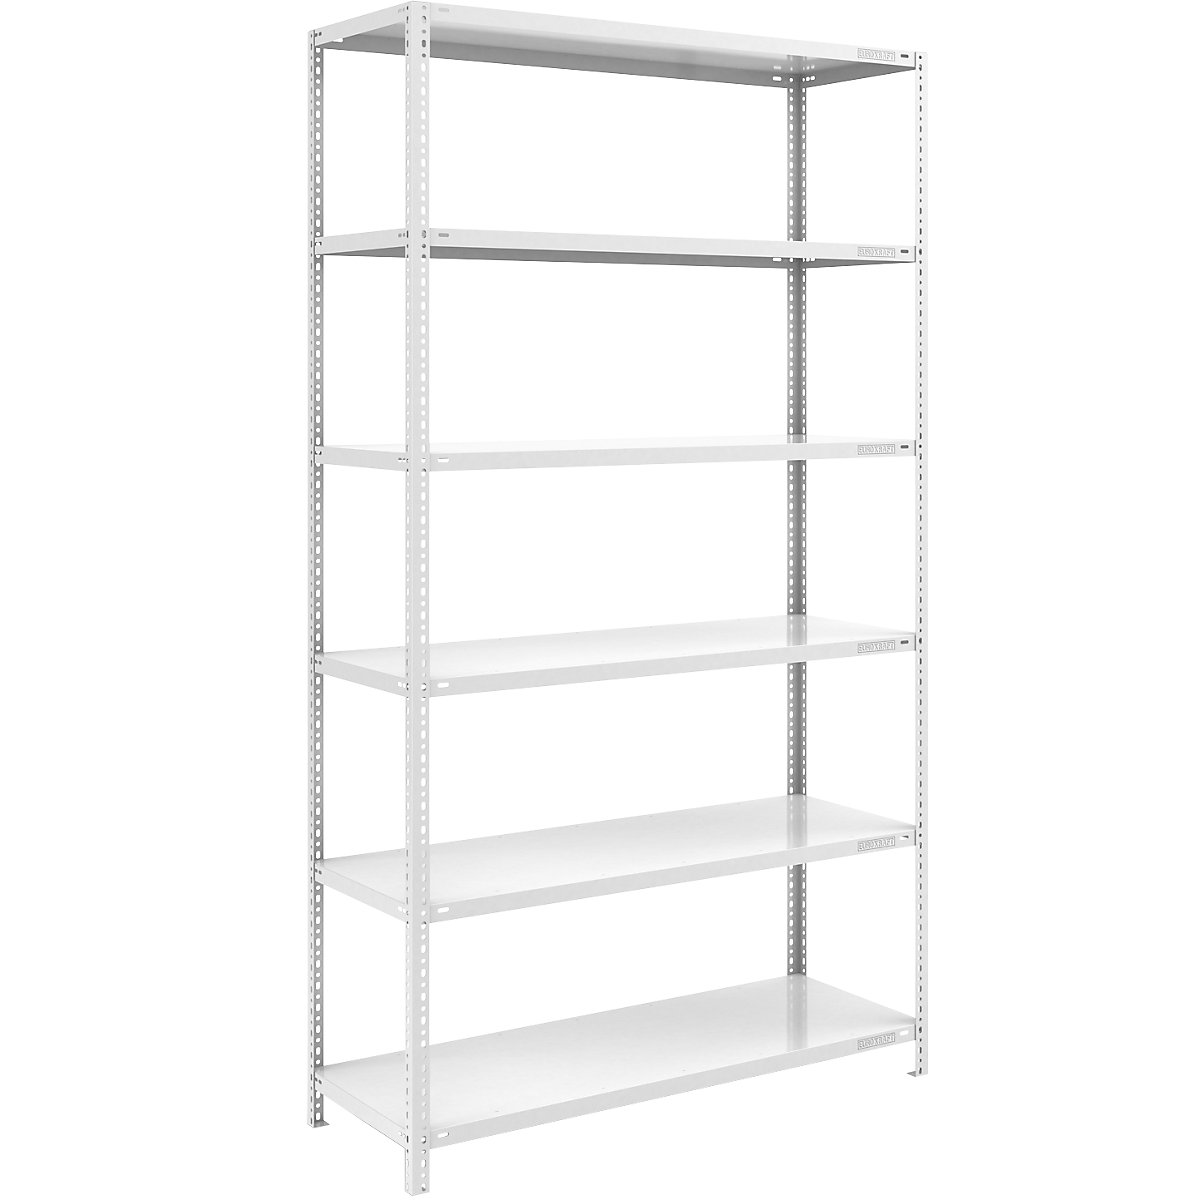 Bolt-together shelf unit, light duty, plastic coated – eurokraft pro, shelf unit height 2500 mm, shelf width 1300 mm, depth 600 mm, standard shelf unit-13